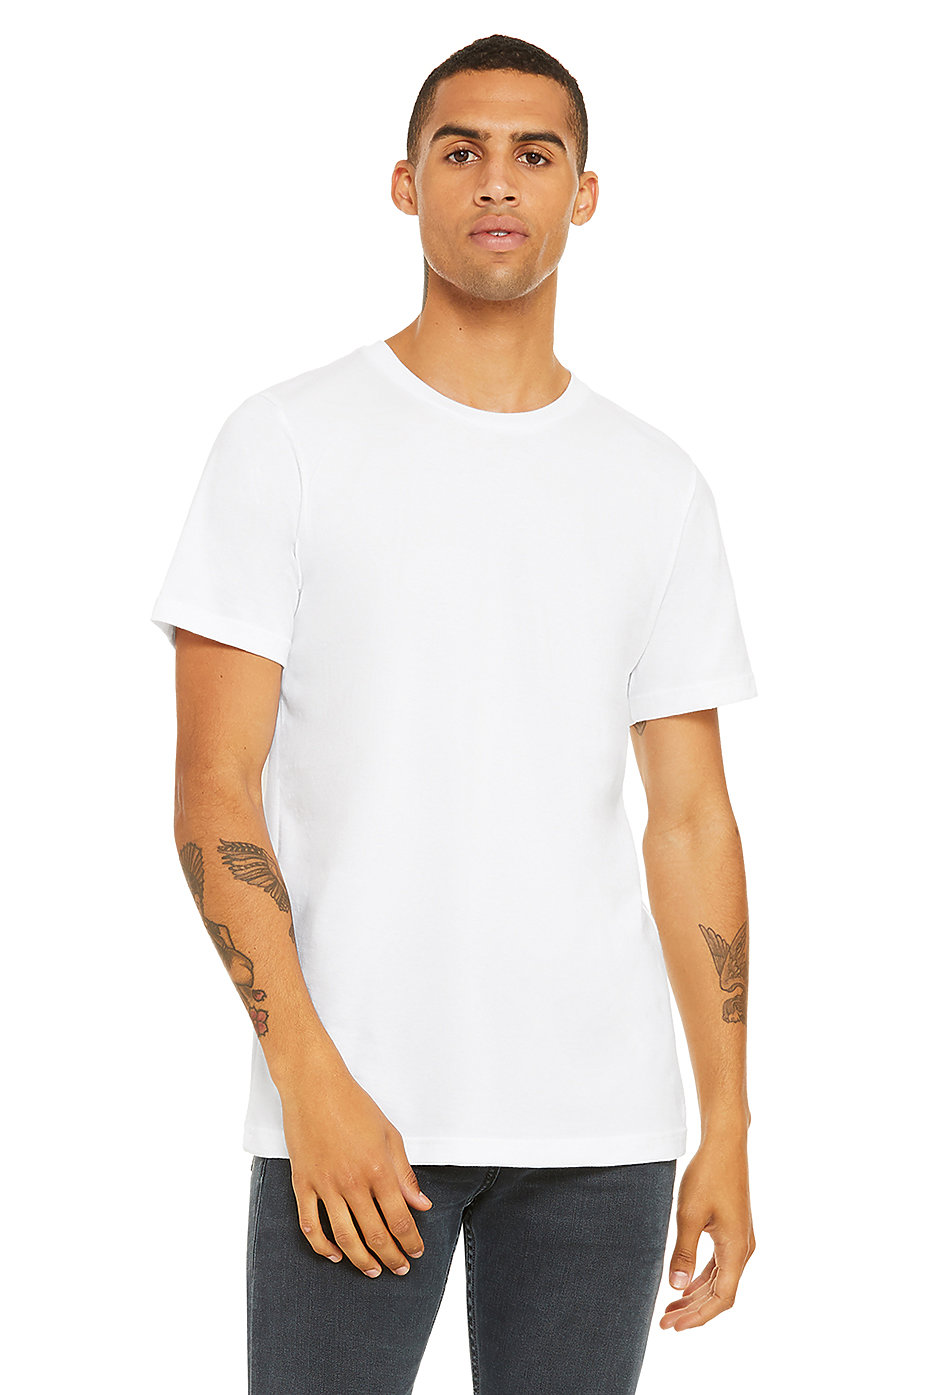 White S discount 67% WOMEN FASHION Shirts & T-shirts Basic NoName T-shirt 